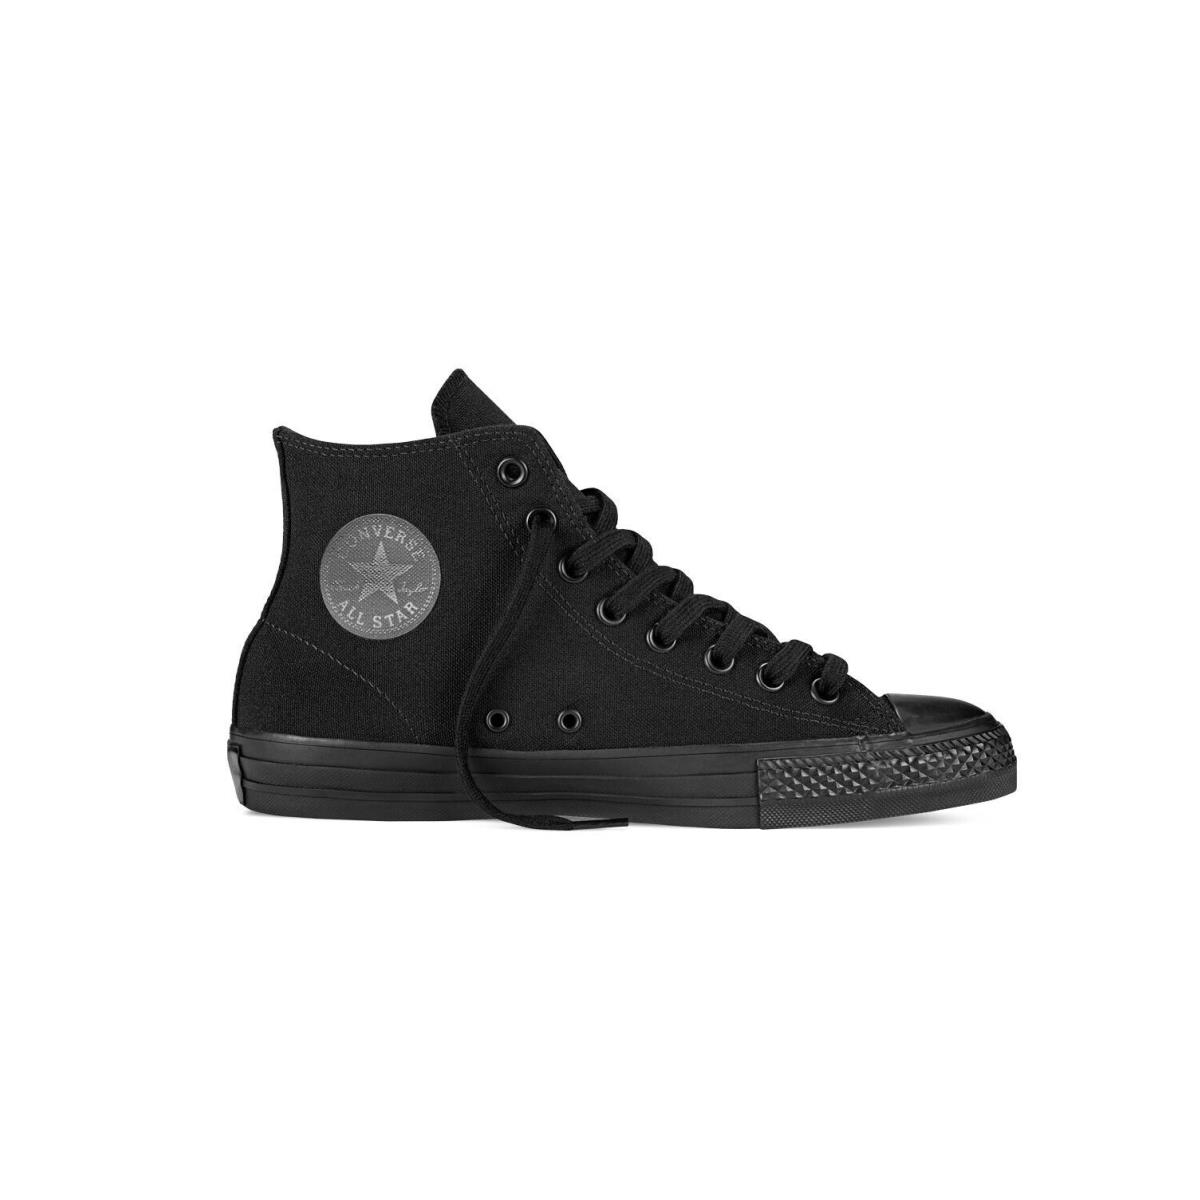 Converse Cons Ctas Pro HI Black/black Sneaker 147496C 136 Men`s Shoe`s - Black/Black